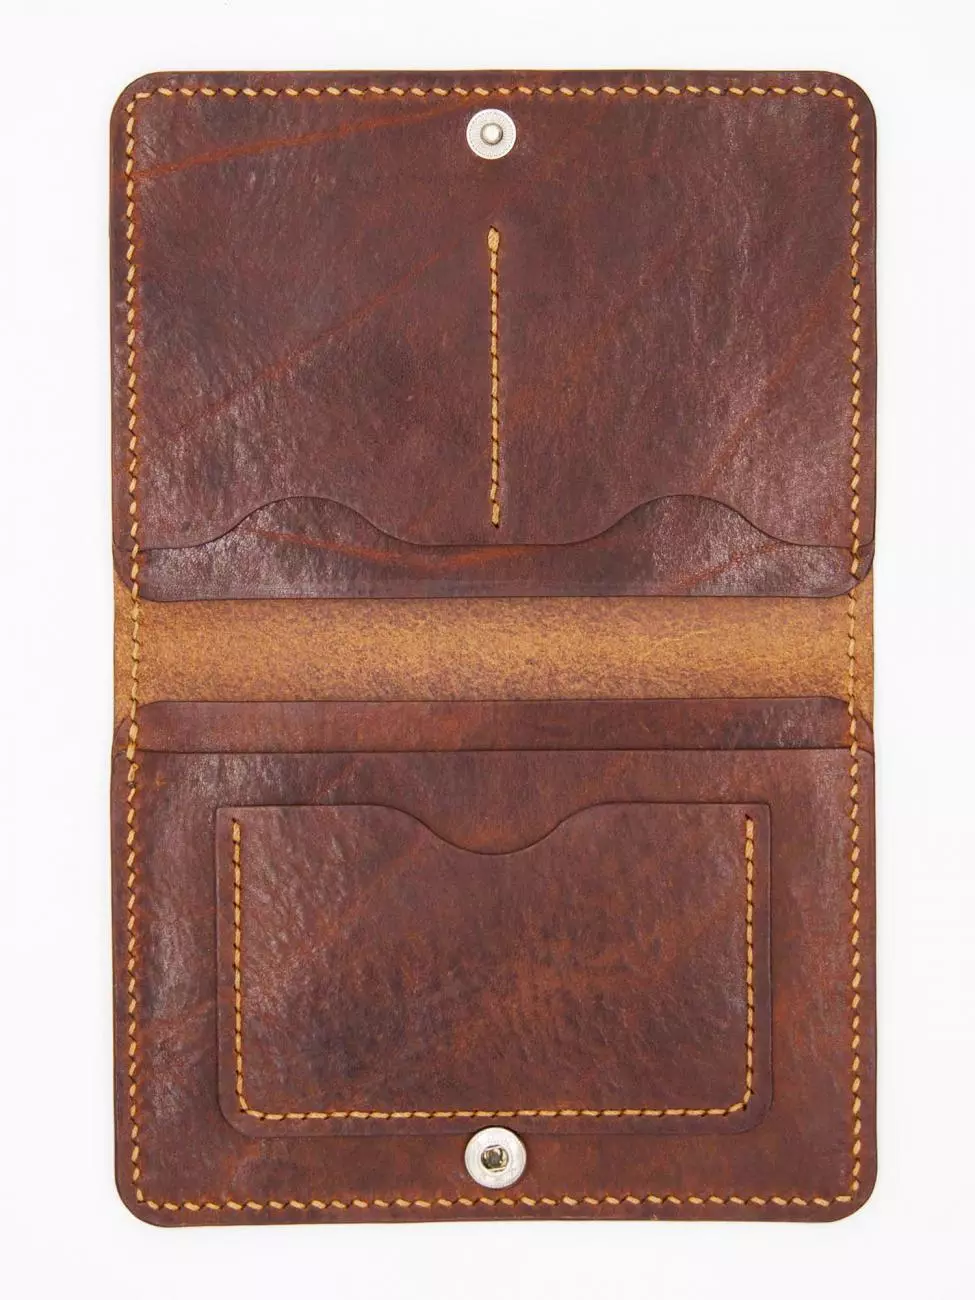 5 - Leather document holder